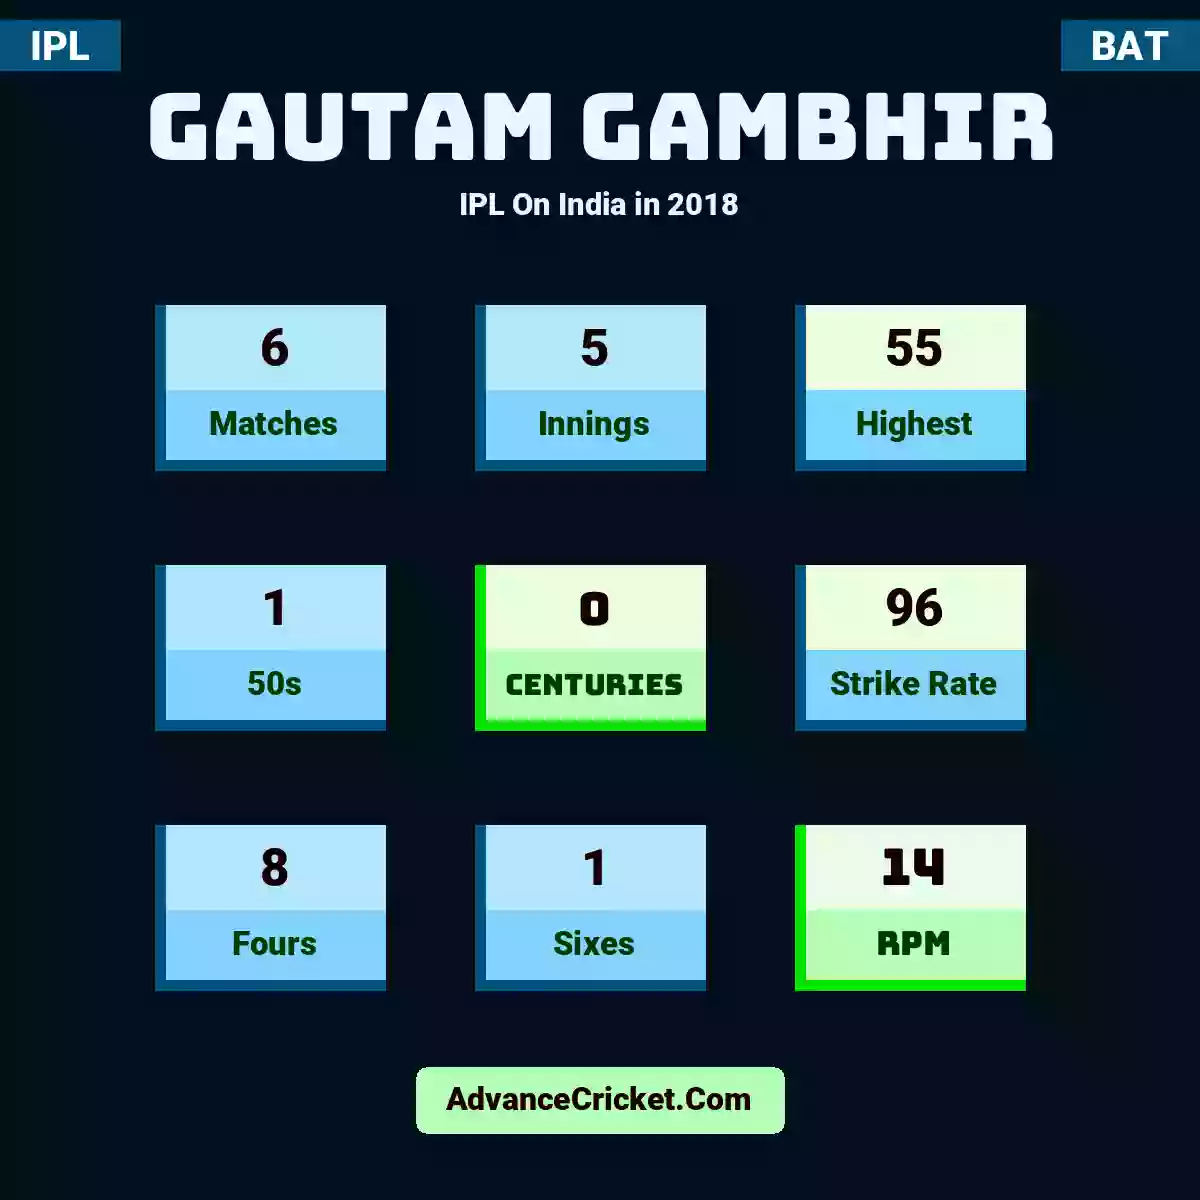 Gautam Gambhir IPL  On India in 2018, Gautam Gambhir played 6 matches, scored 55 runs as highest, 1 half-centuries, and 0 centuries, with a strike rate of 96. G.Gambhir hit 8 fours and 1 sixes, with an RPM of 14.